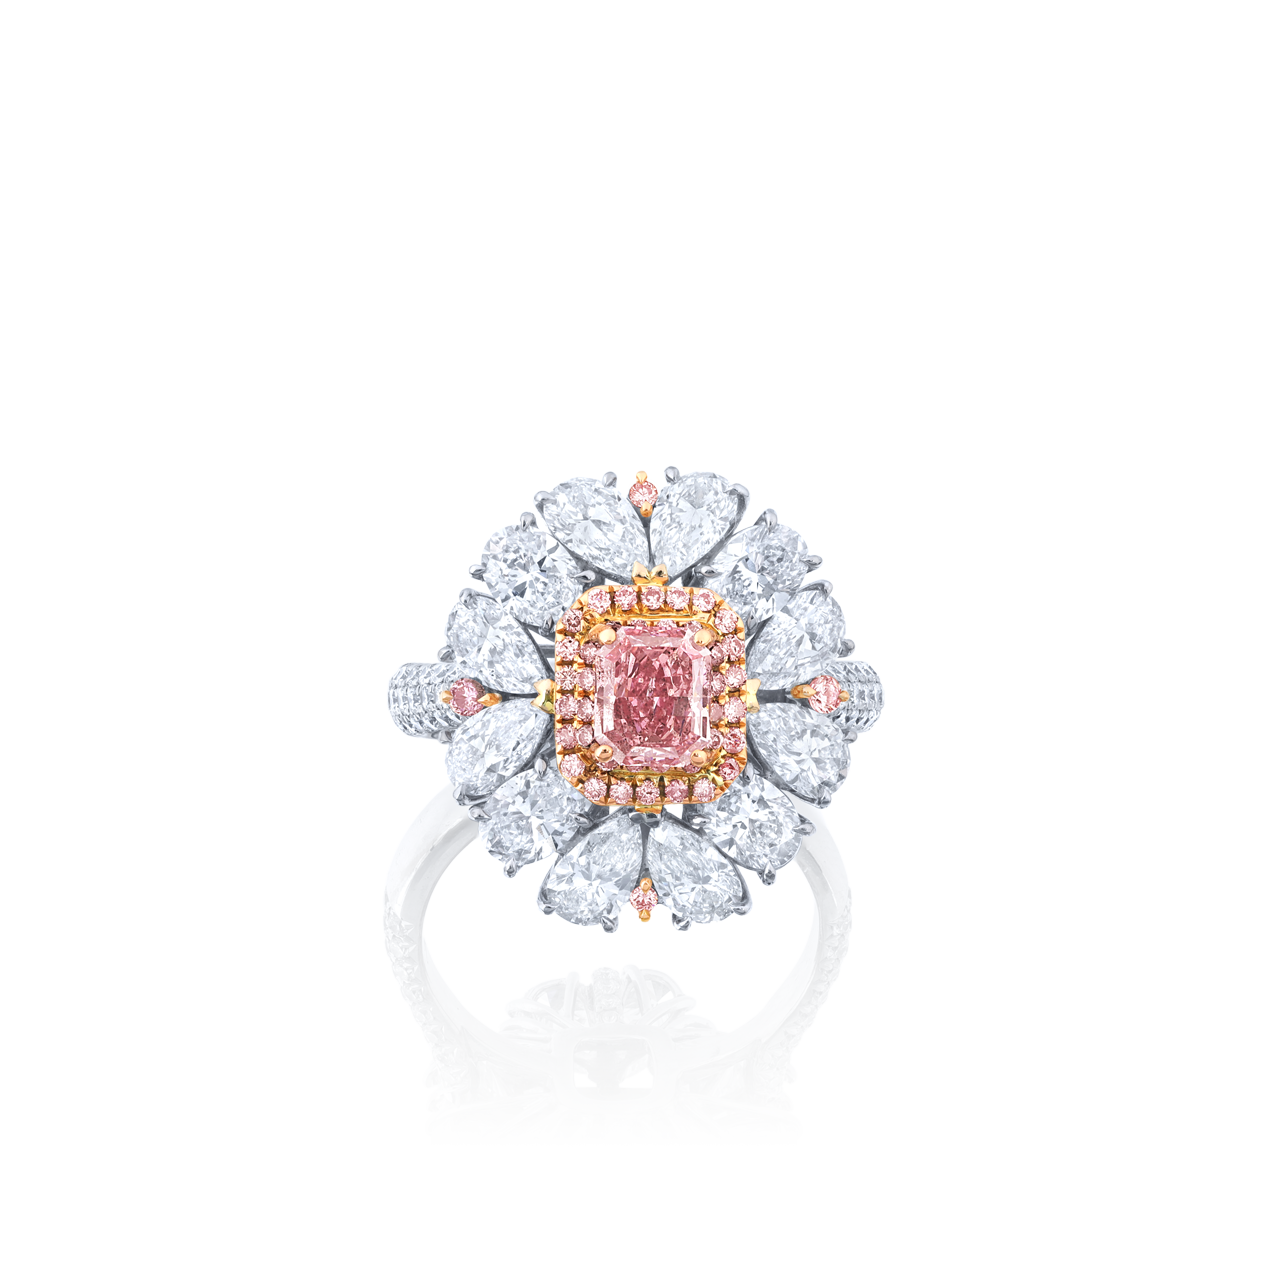 0.63克拉 阿蓋爾粉鑽戒
Argyle Pink Colored Diamond Ring